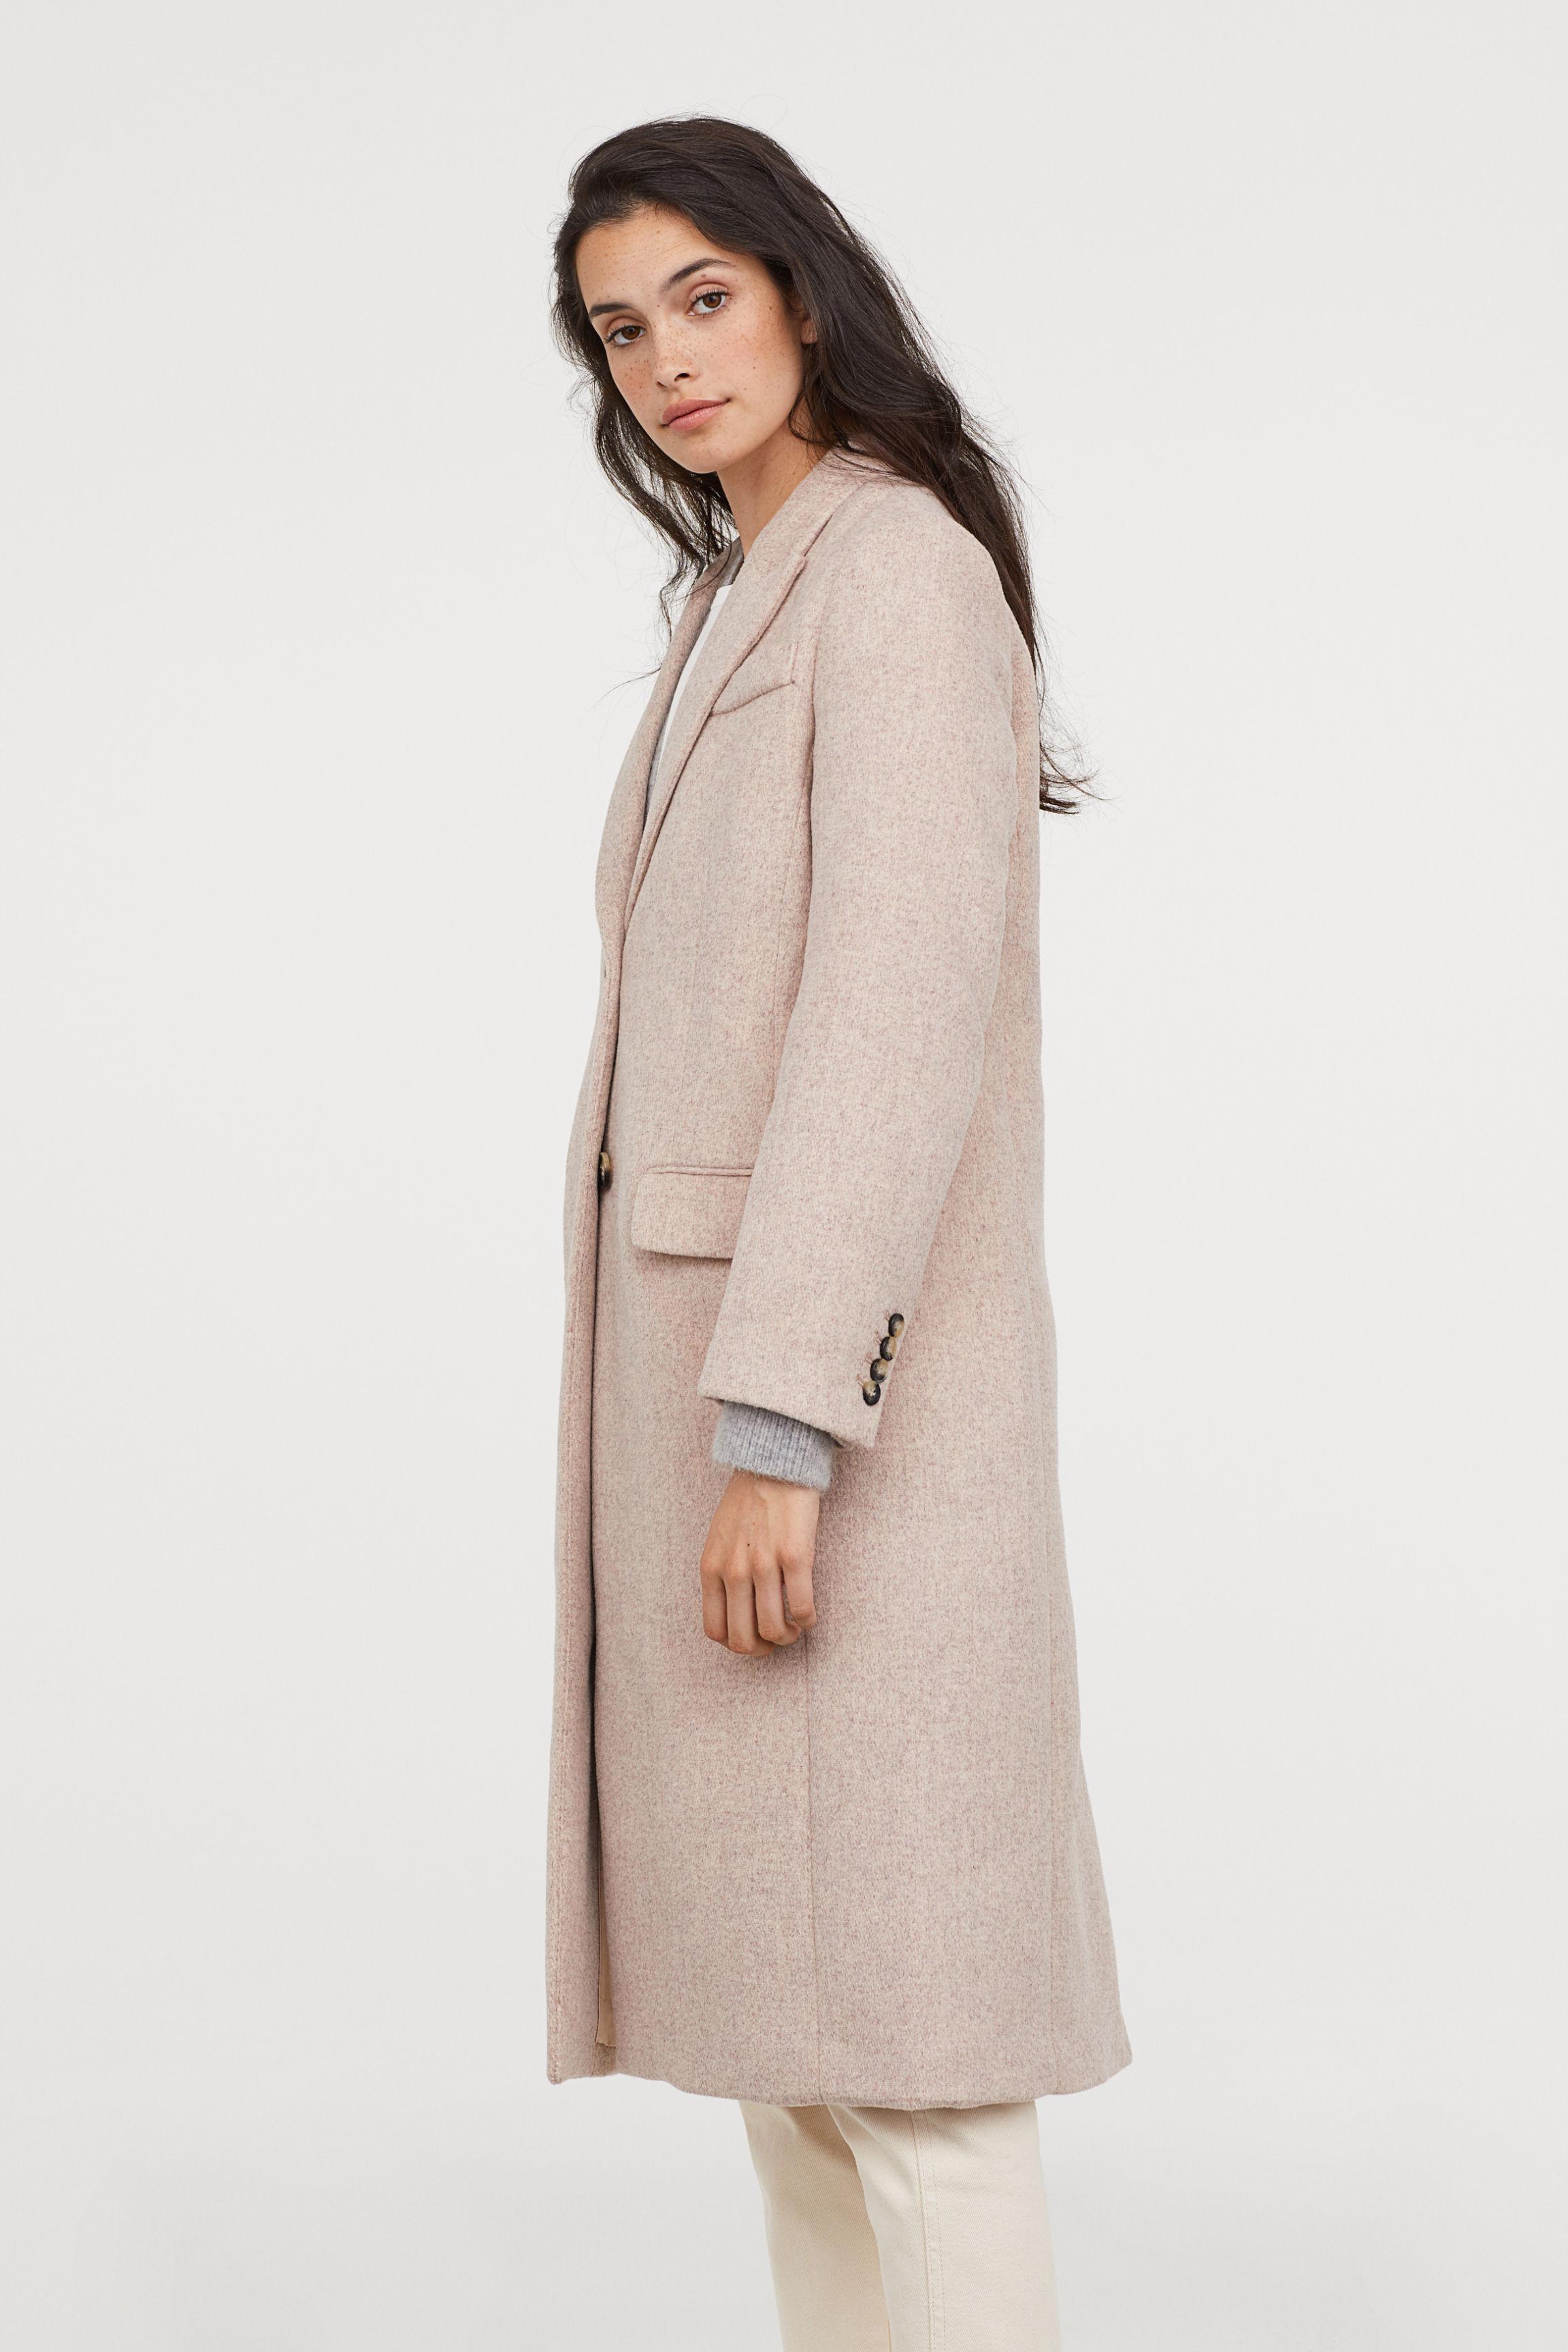 H&M Wool-blend Coat in Light Beige Marl (Natural) | Lyst Canada